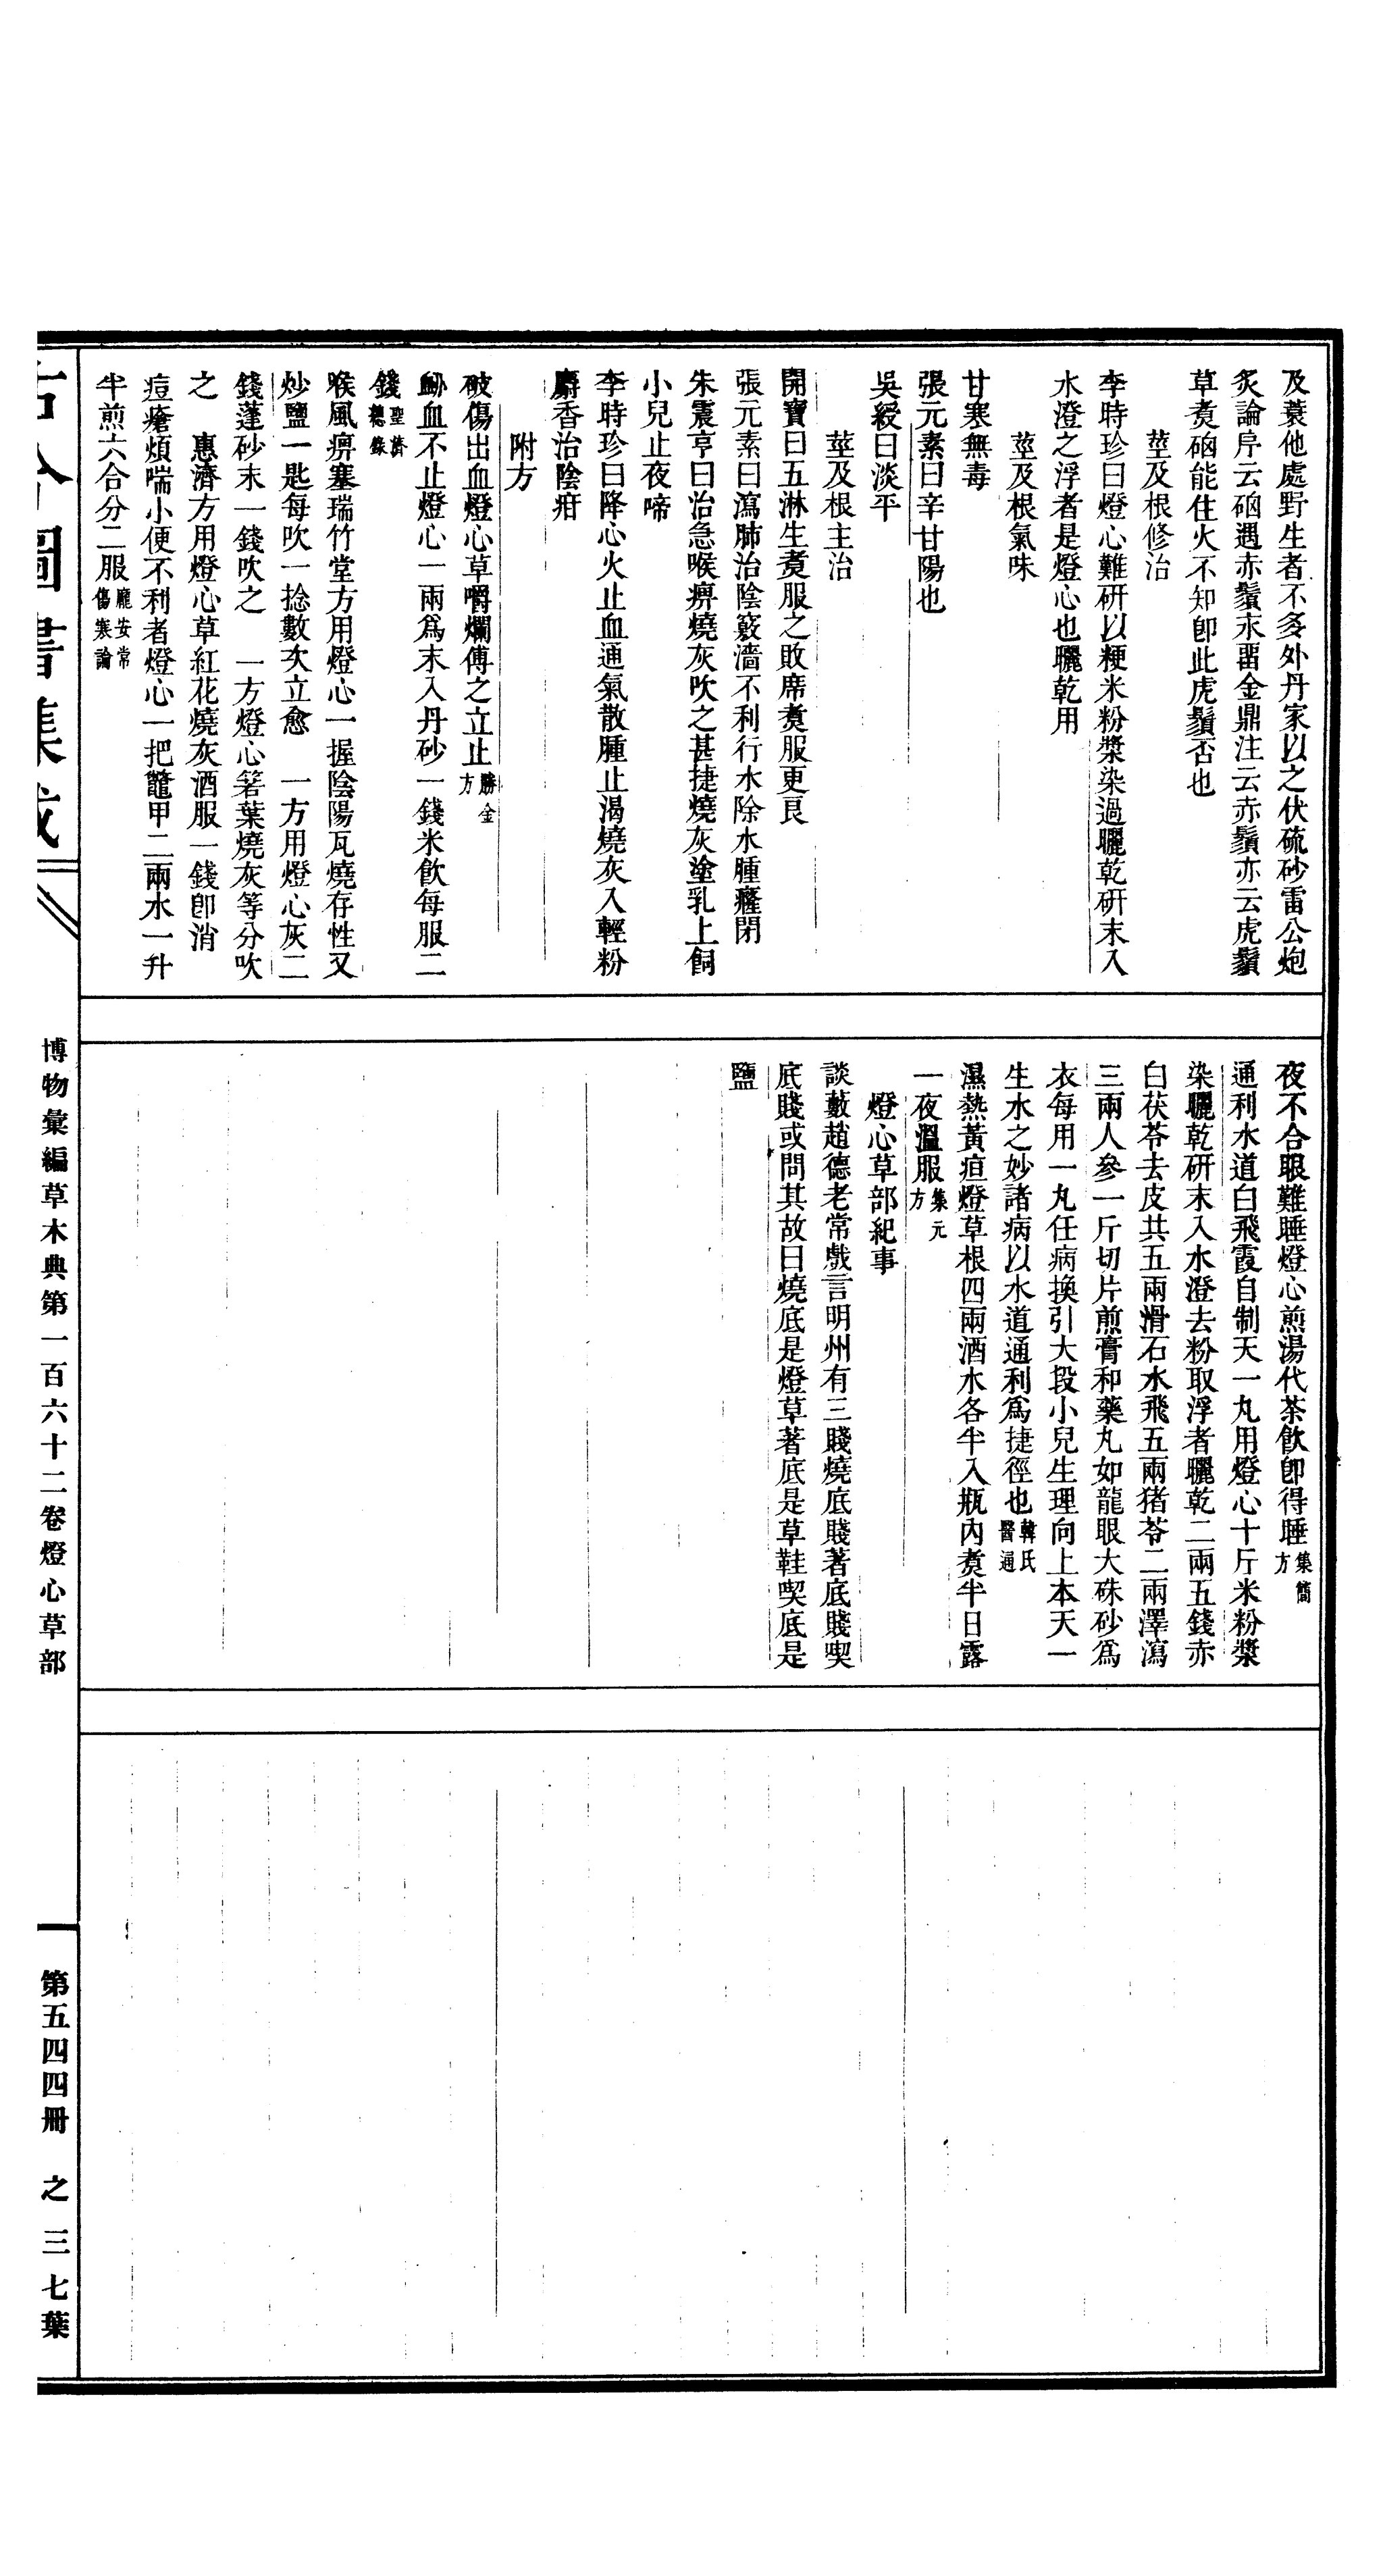 Page Gujin Tushu Jicheng Volume 544 1700 1725 Djvu 74 维基文库 自由的图书馆